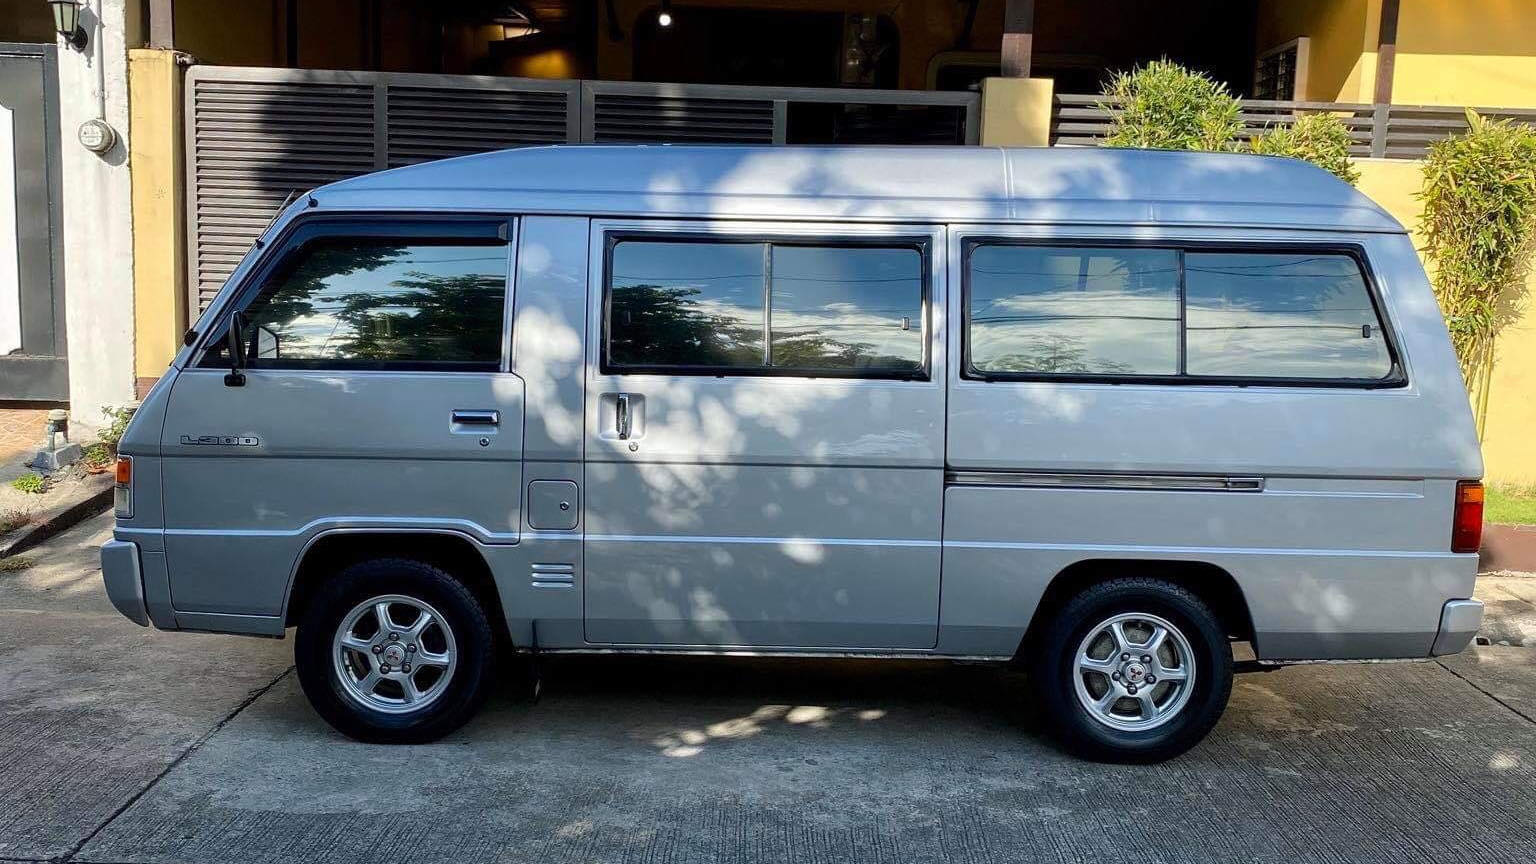 Mitsubishi L300 Versa Van owner shares 